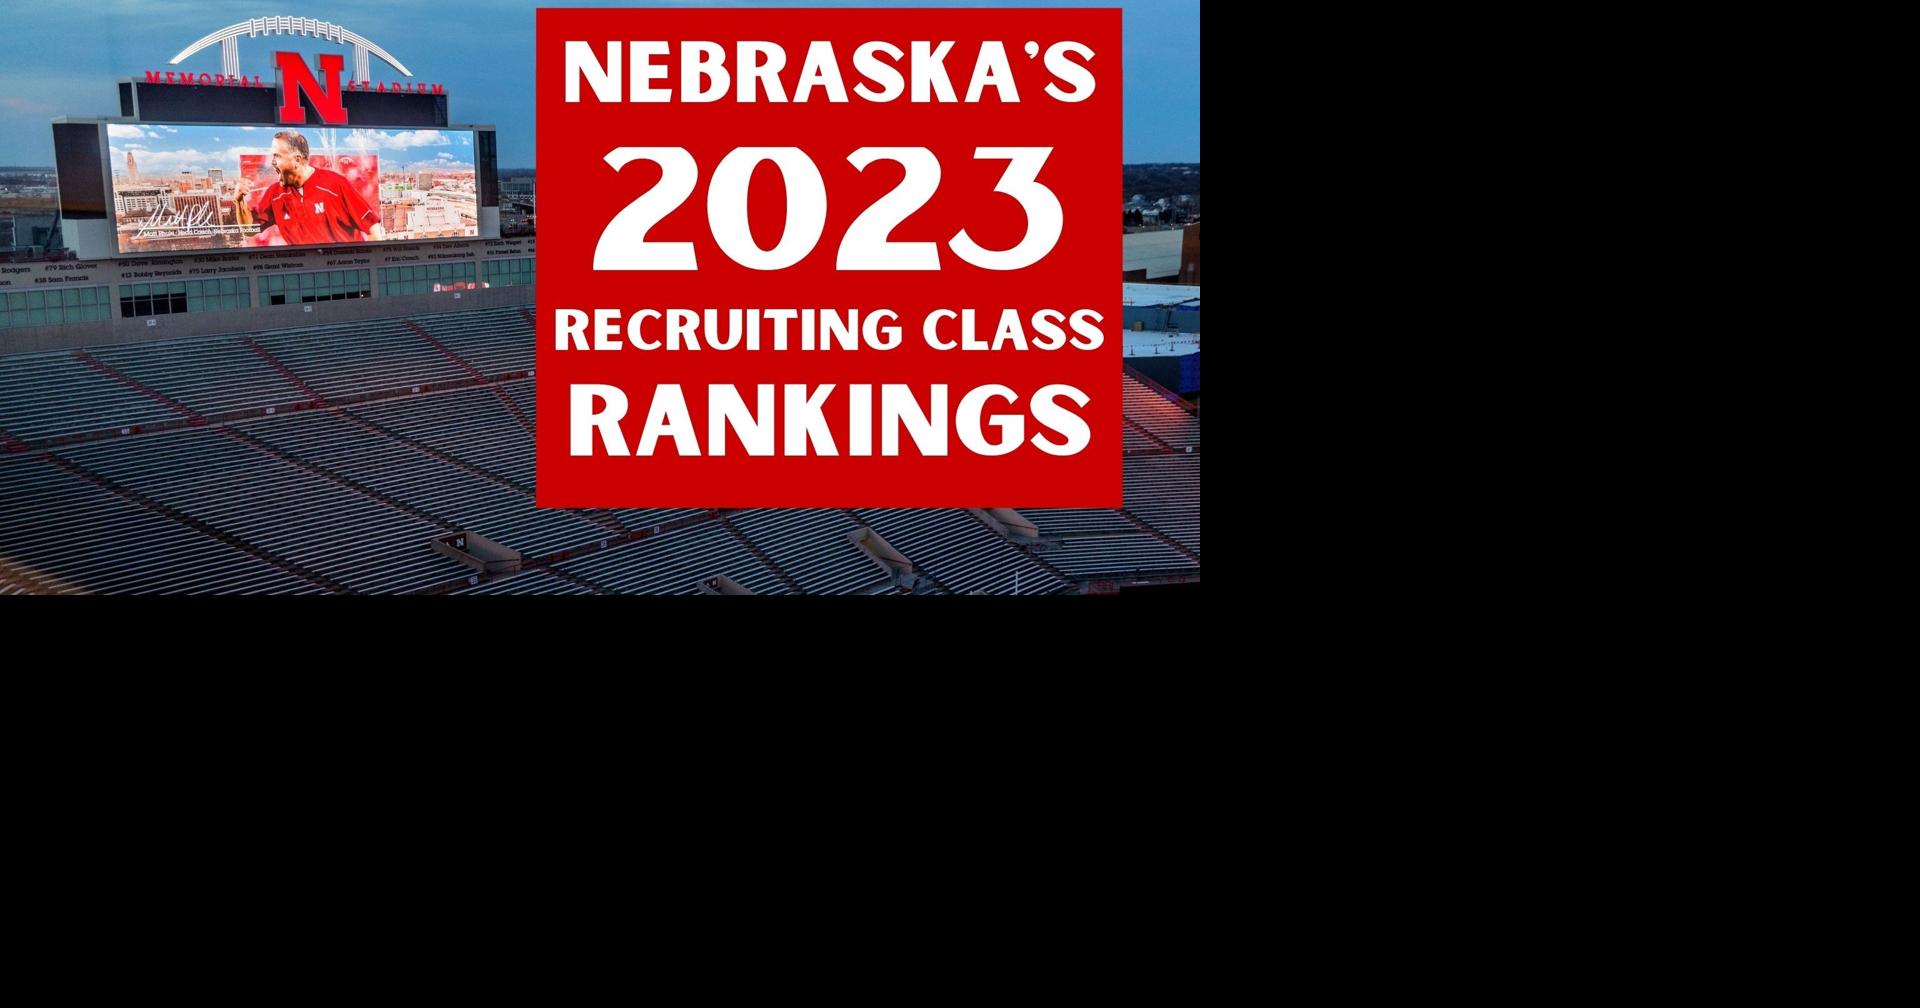 Nebraska football's 2023 recruiting class rankings